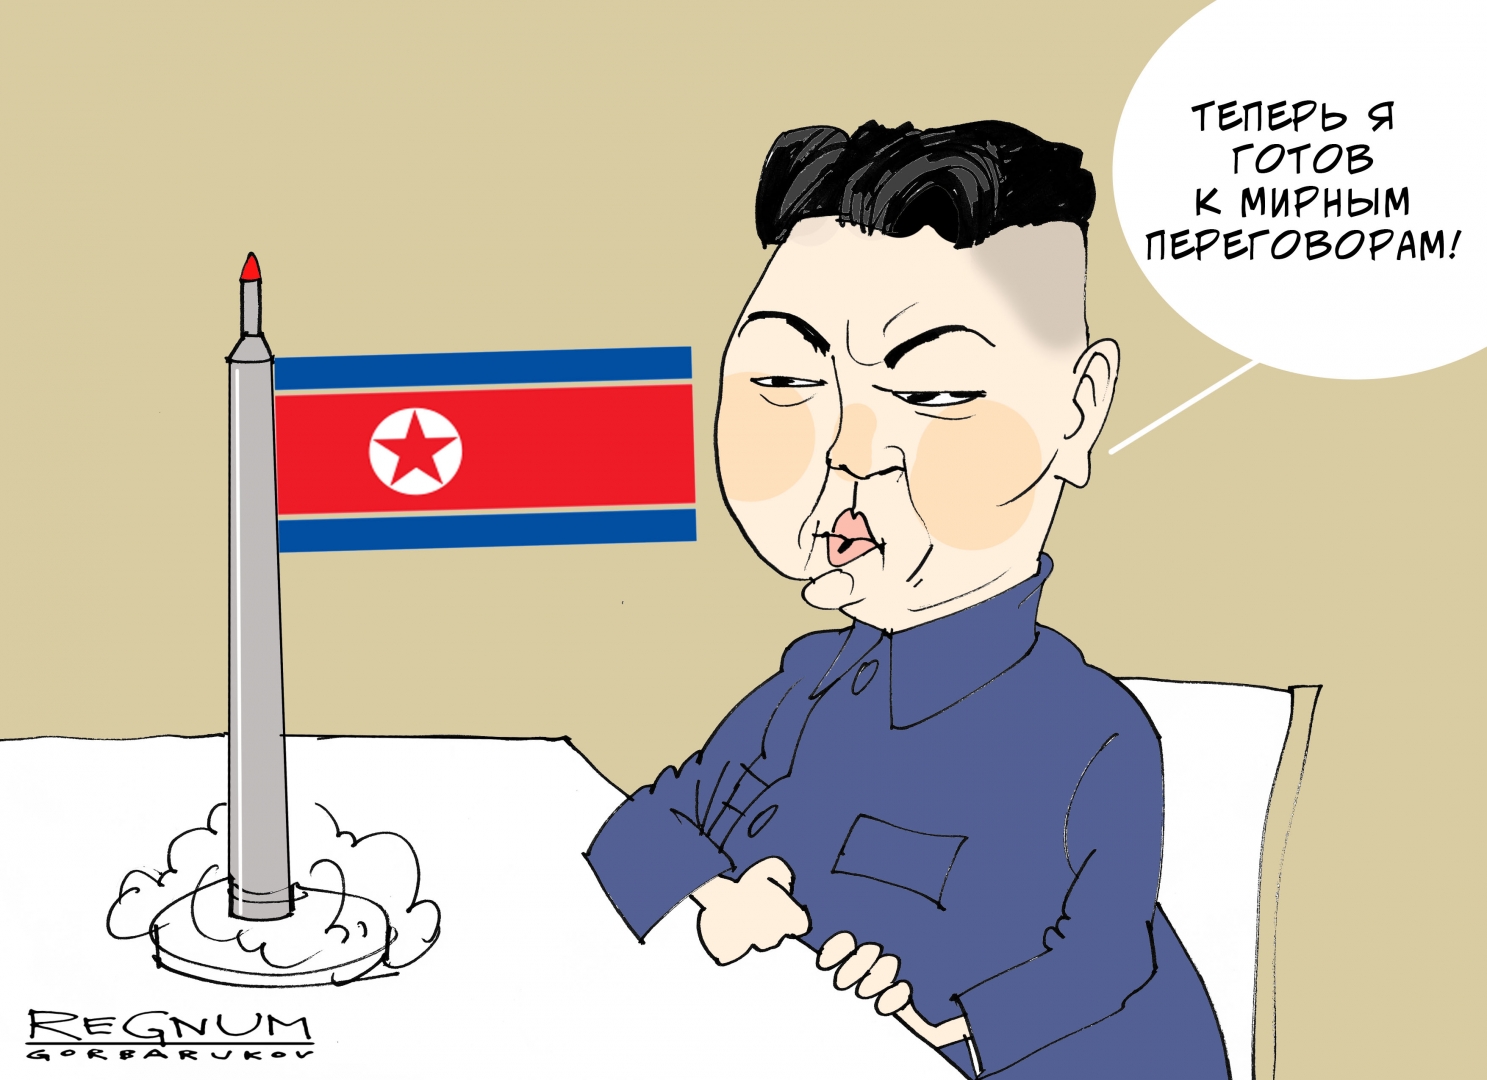 Карикатура корейской газеты на теракт в крокусе. КНДР карикатура. Северная Корея карикатуры. Северная Корея США карикатур.